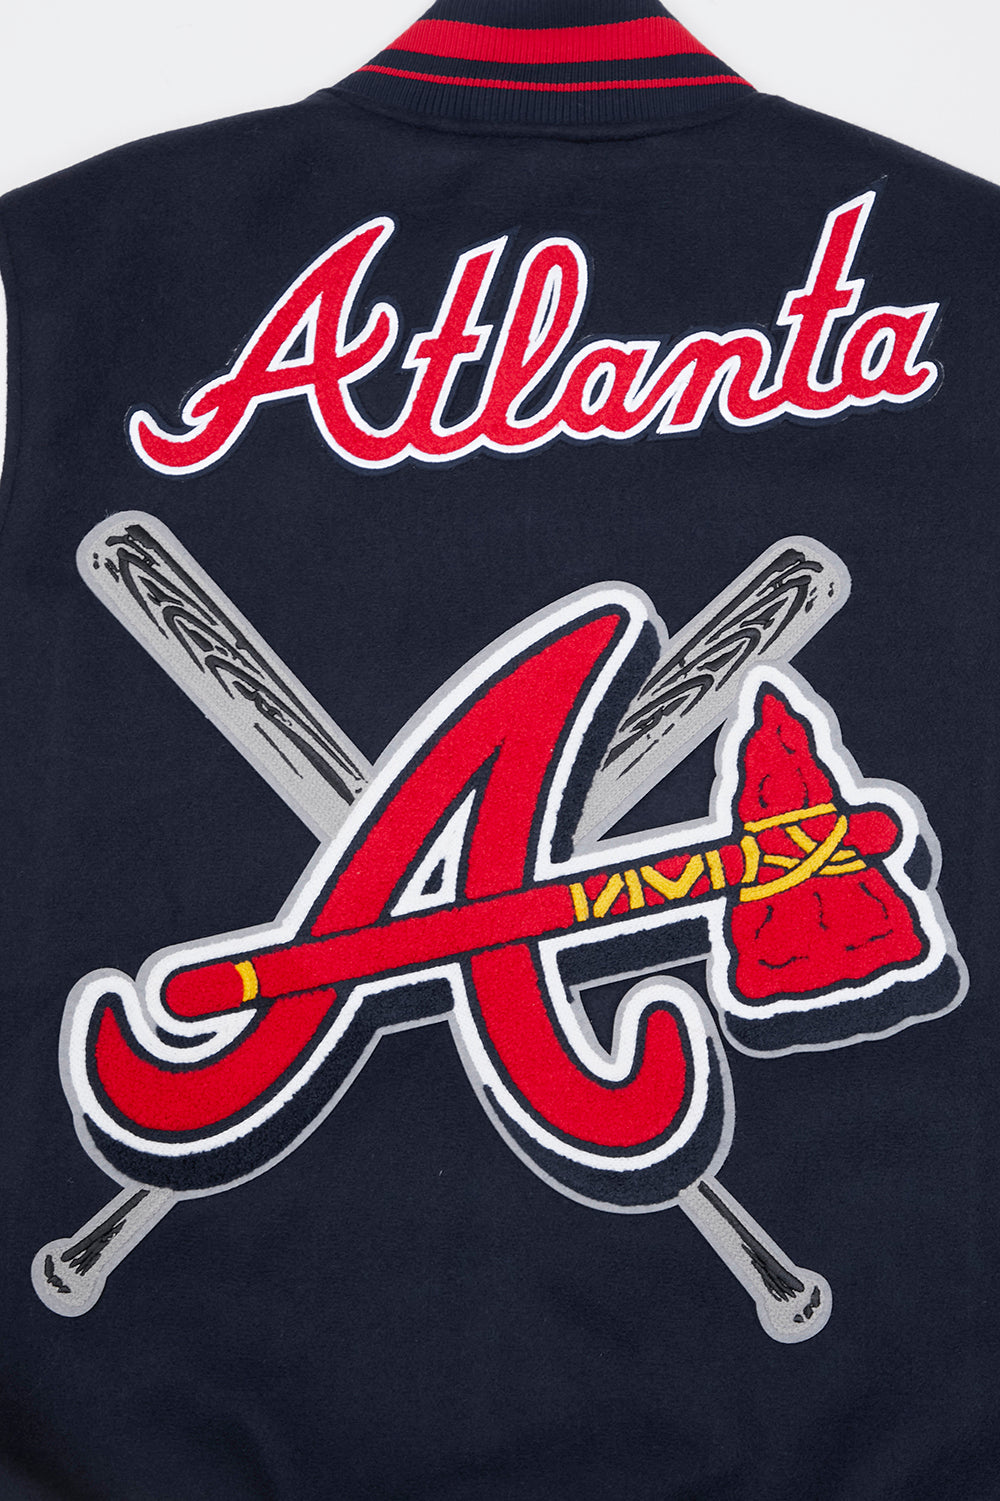 Atlanta Braves Two-Tone Wool Jacket w/ Embroidered Logos - Navy